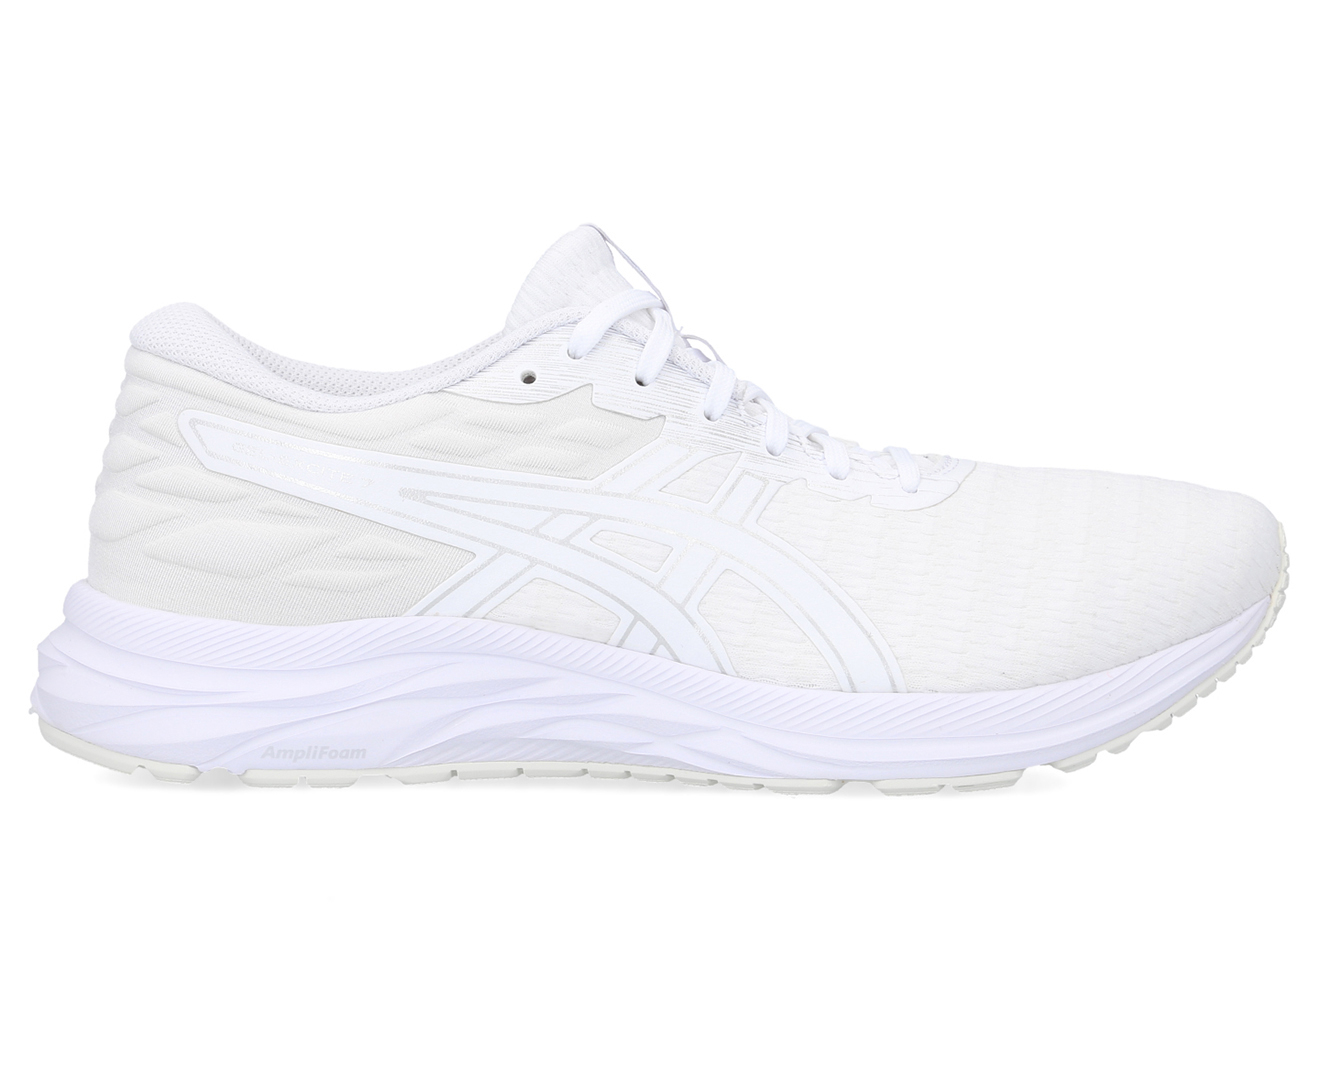 ASICS Women's Gel-Excite 7 Twist Running Shoes - White | Catch.com.au